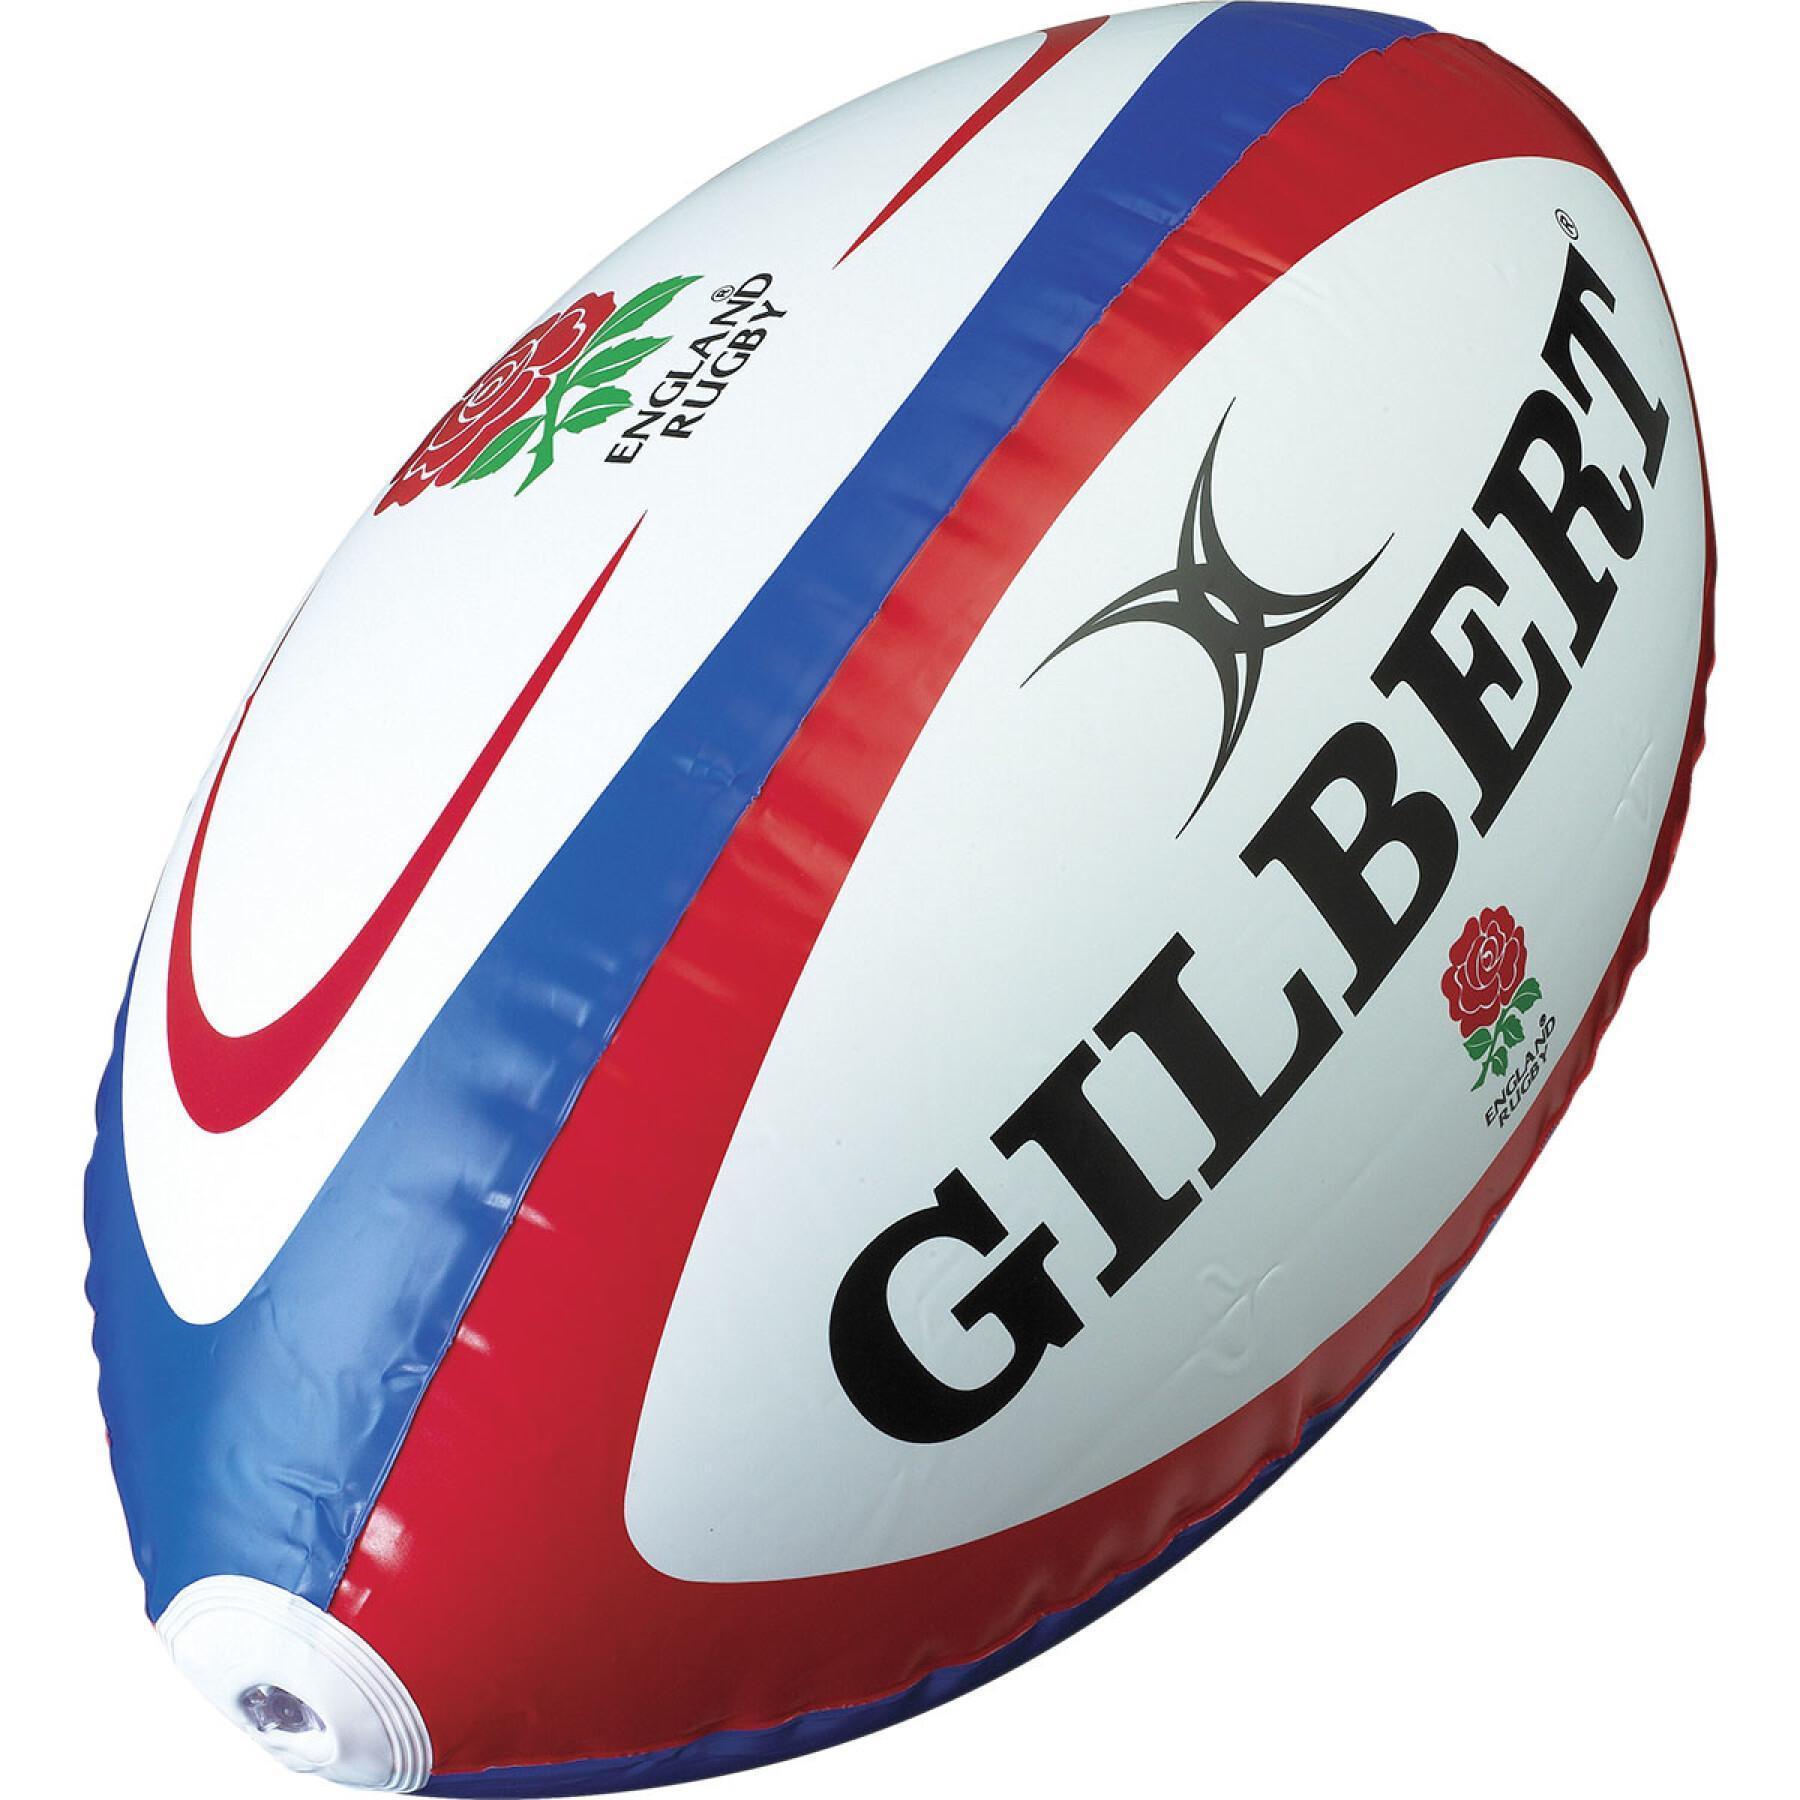 Riesiger aufblasbarer Rugbyball Gilbert Angleterre (tu)